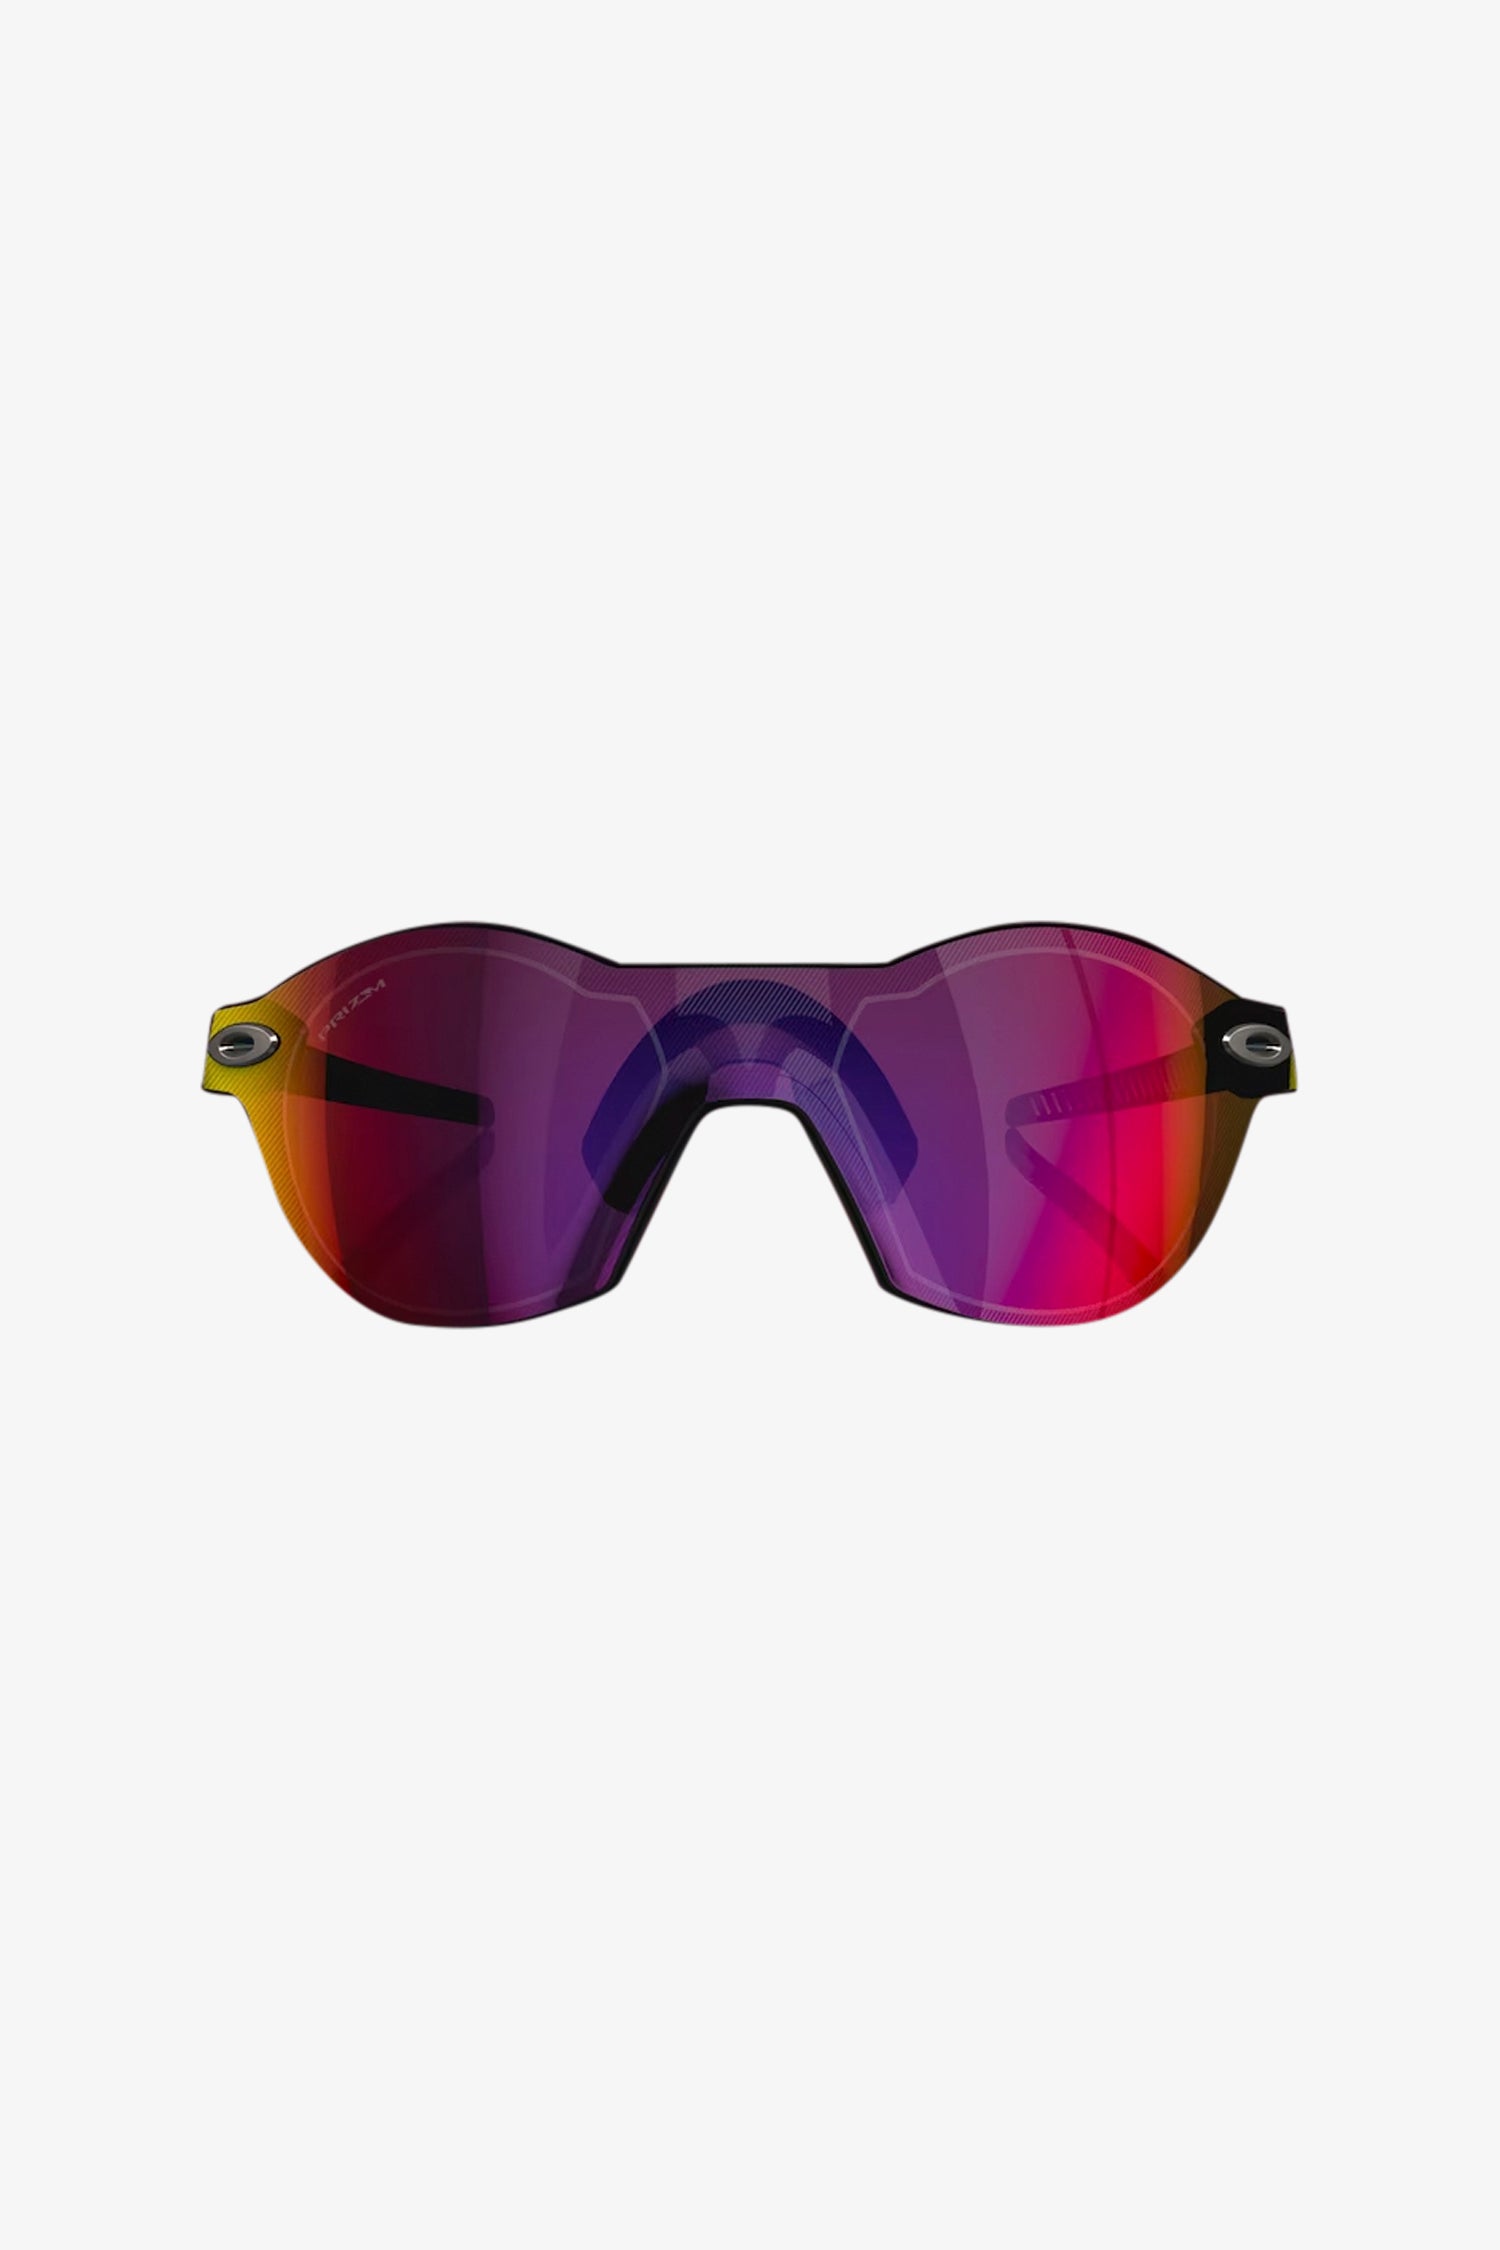 Subzero Community Collection Sunglasses- Selectshop FRAME